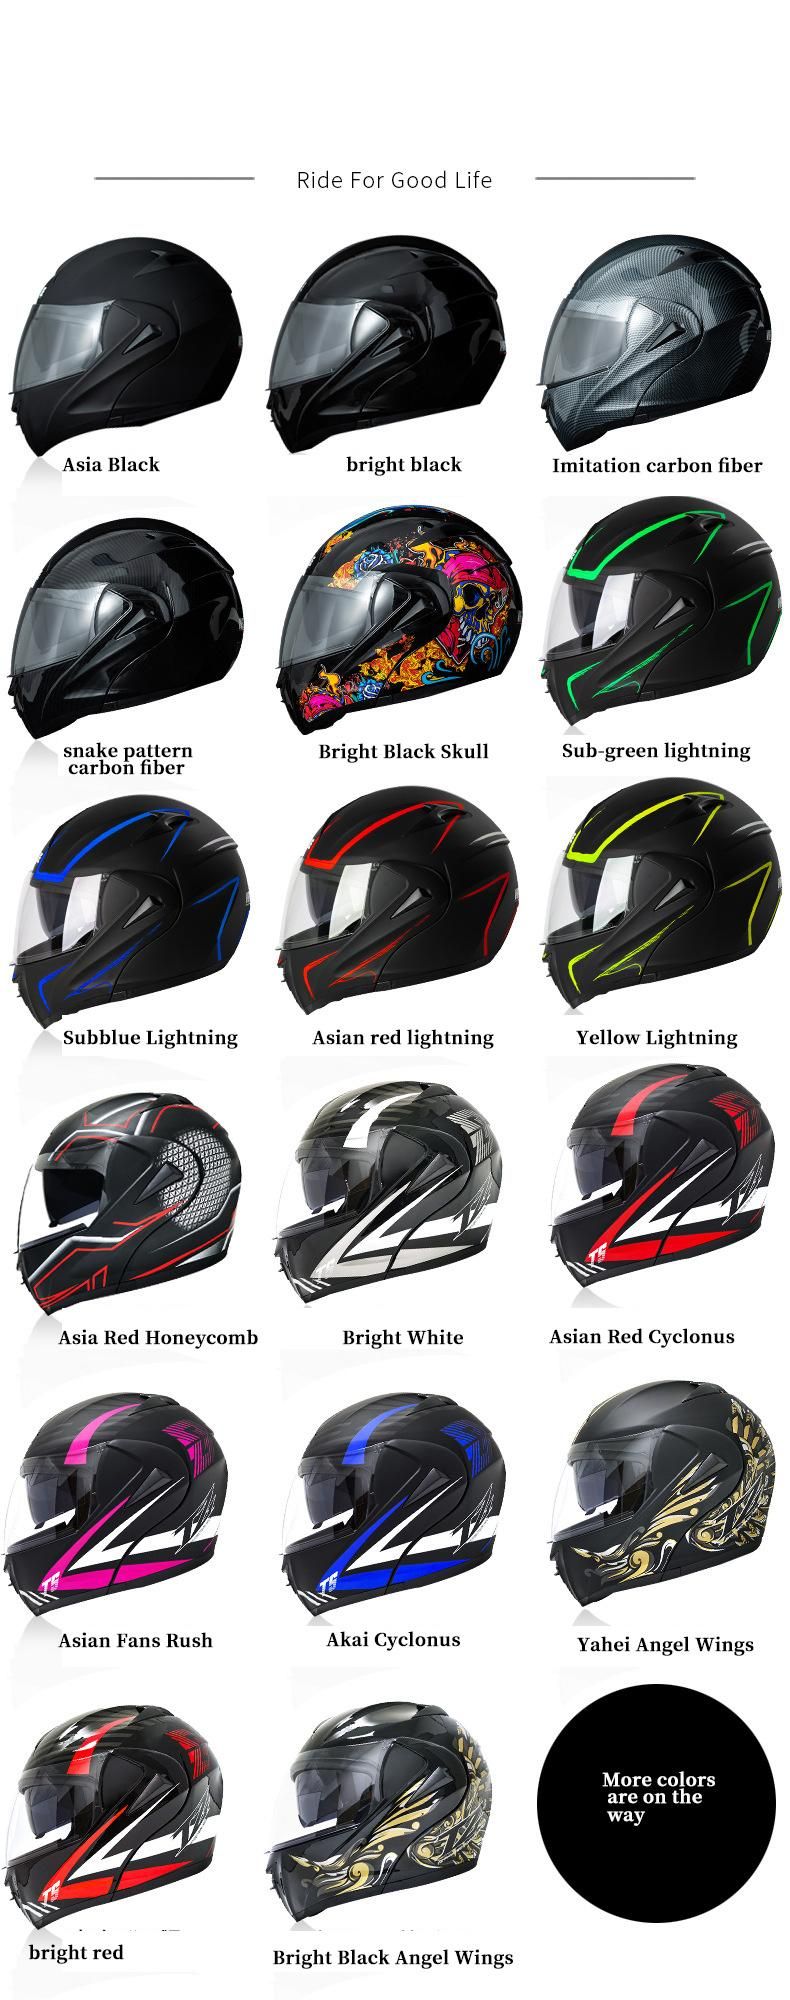 Factory Hot Selling Bluetooth Bright Black Tea Mirrormotorcycle Helmet with Bluetoothfull Face Modular Unique Motorcycle Helmethelmet Motorcycle Helmet